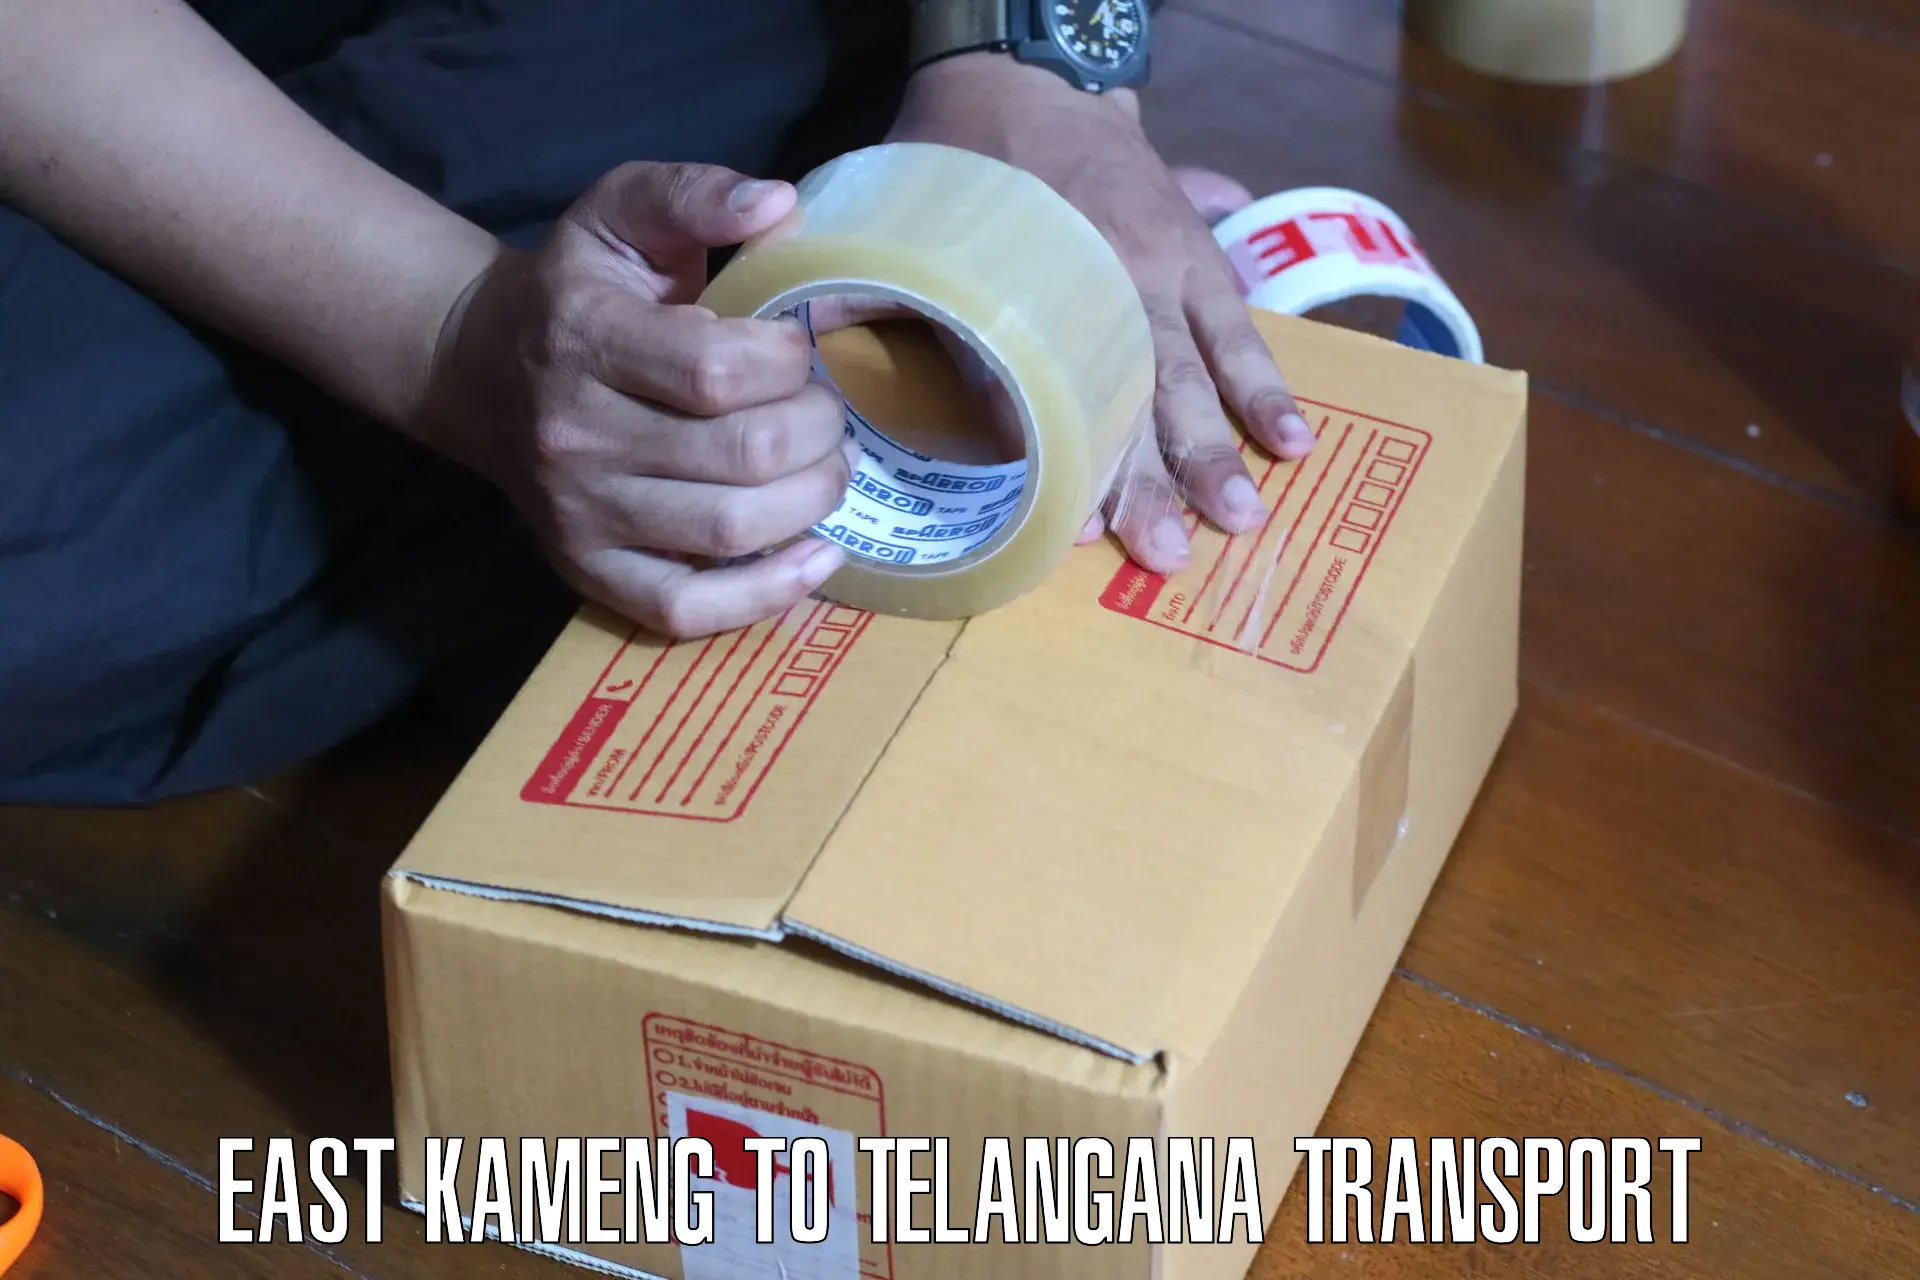 Transport in sharing East Kameng to Karimnagar